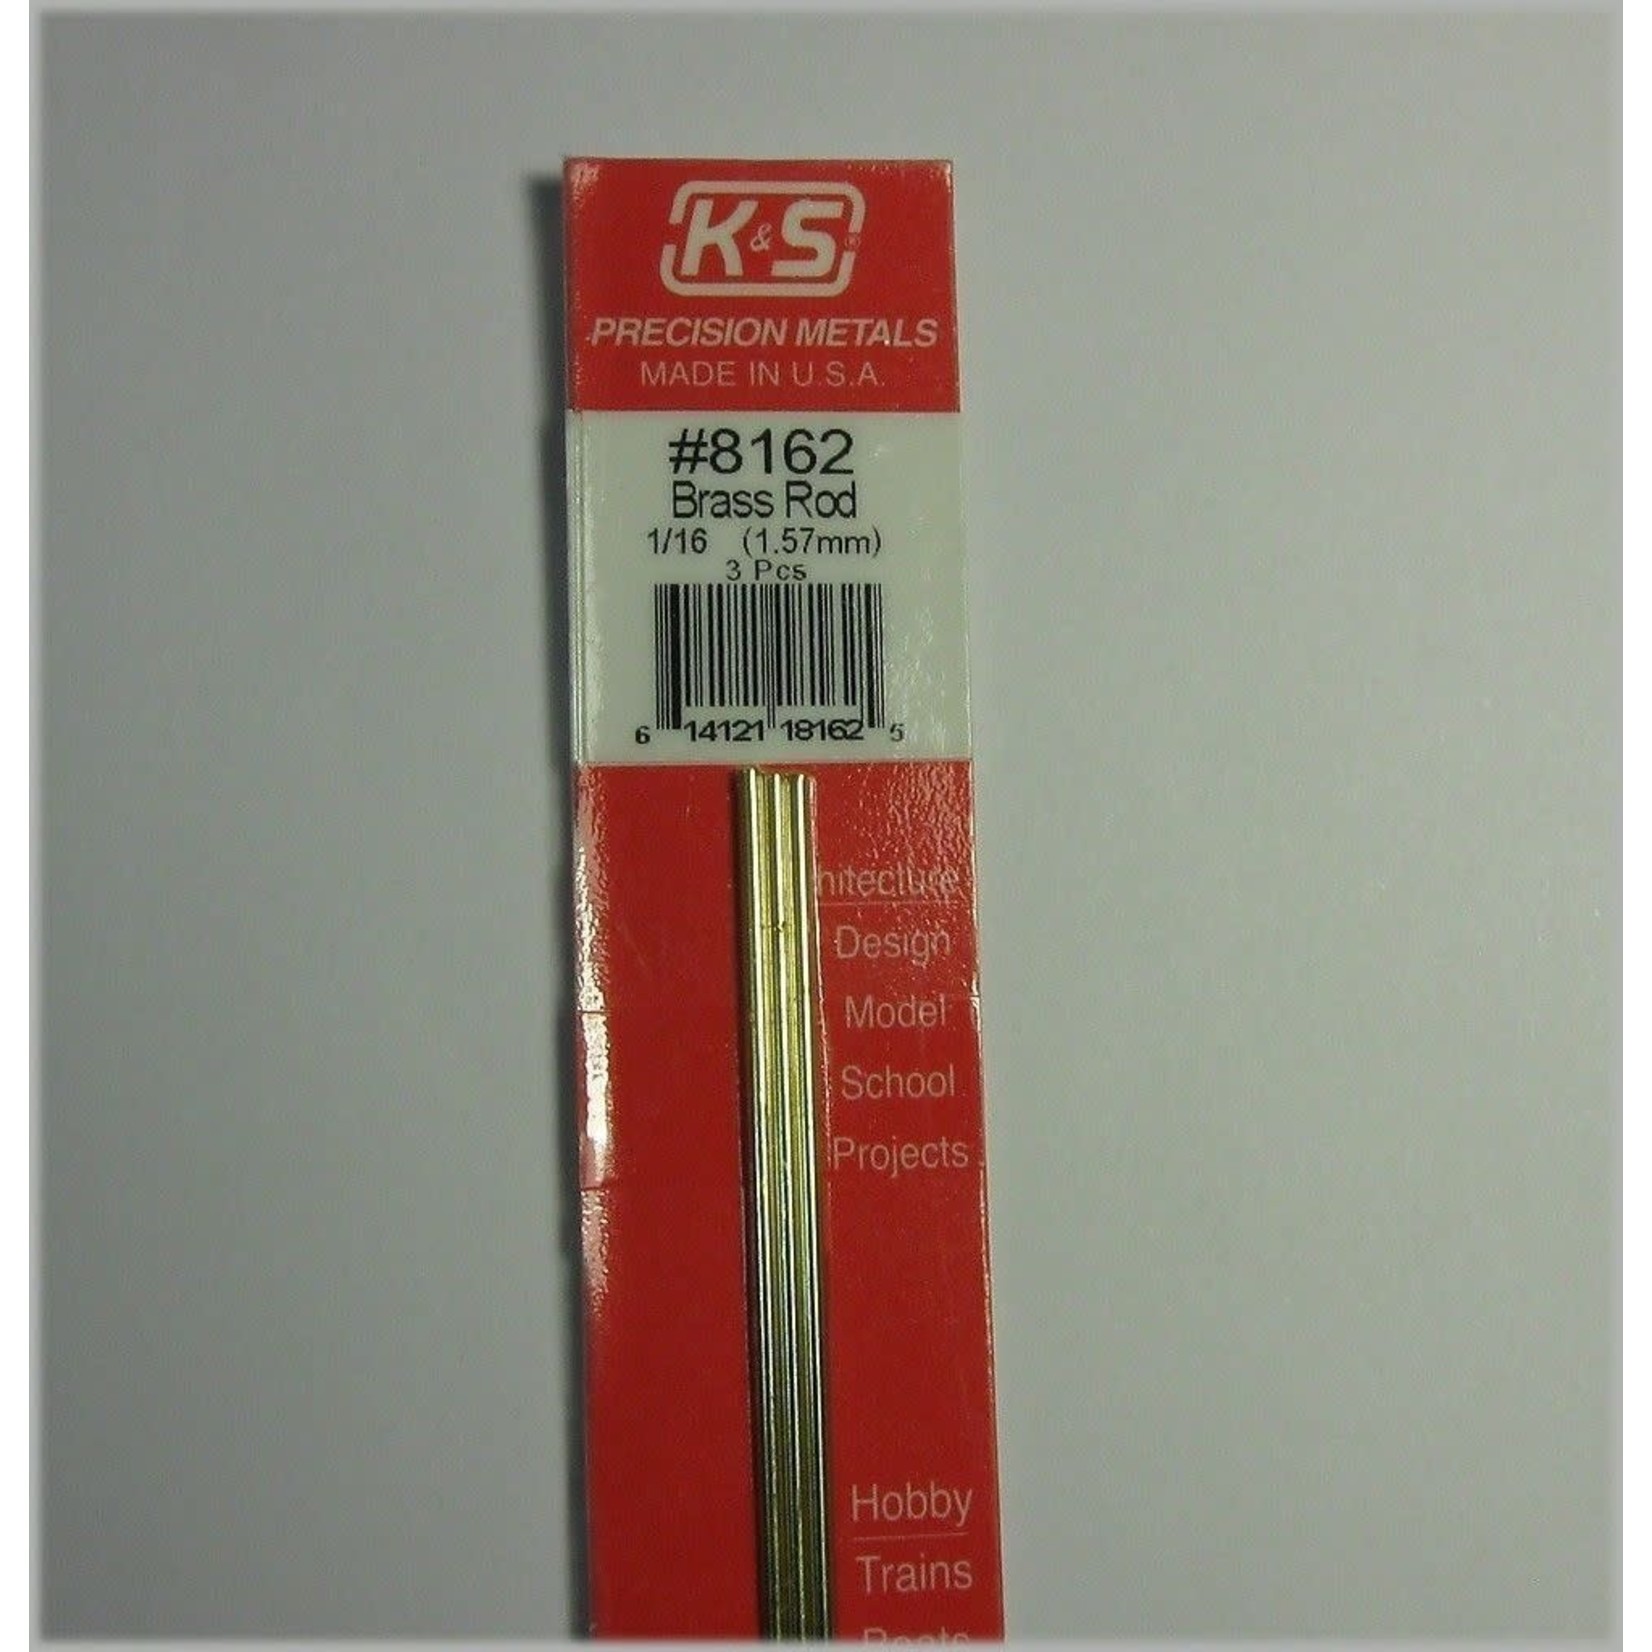 K&S Metals KSE8162 1/16 in Solid Brass Rod (3pc)